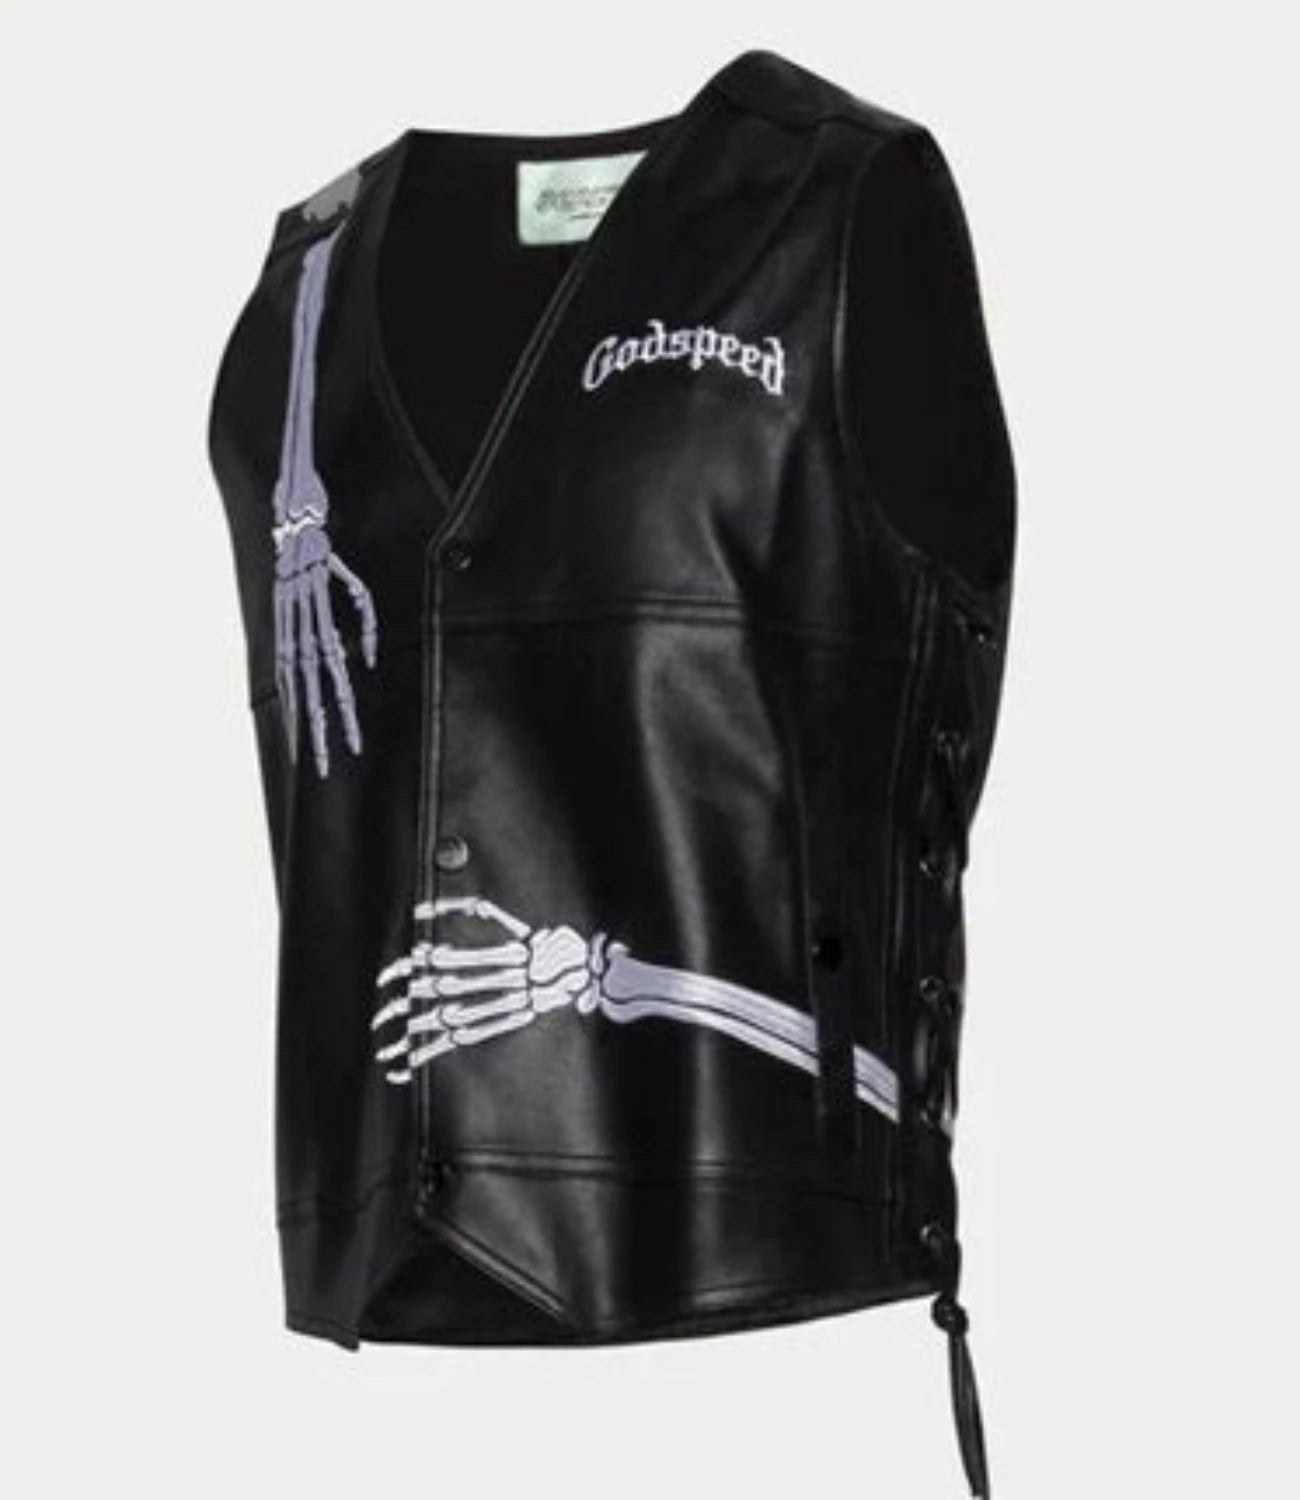 Rod Godspeed Leather Vest